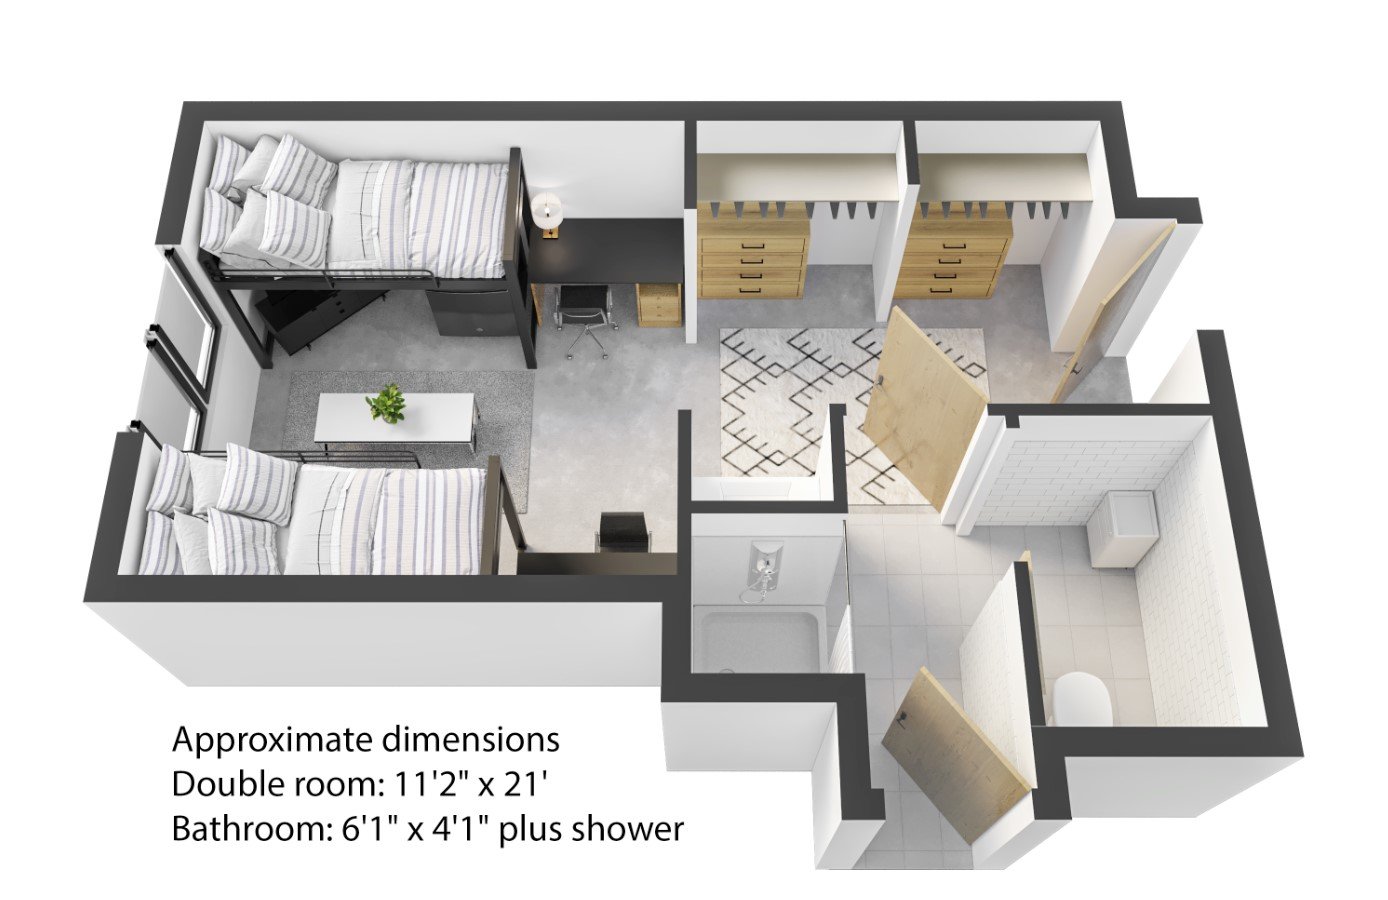 Hotel Floor Plans - Importance and Benefits - 2D & 3D Plans